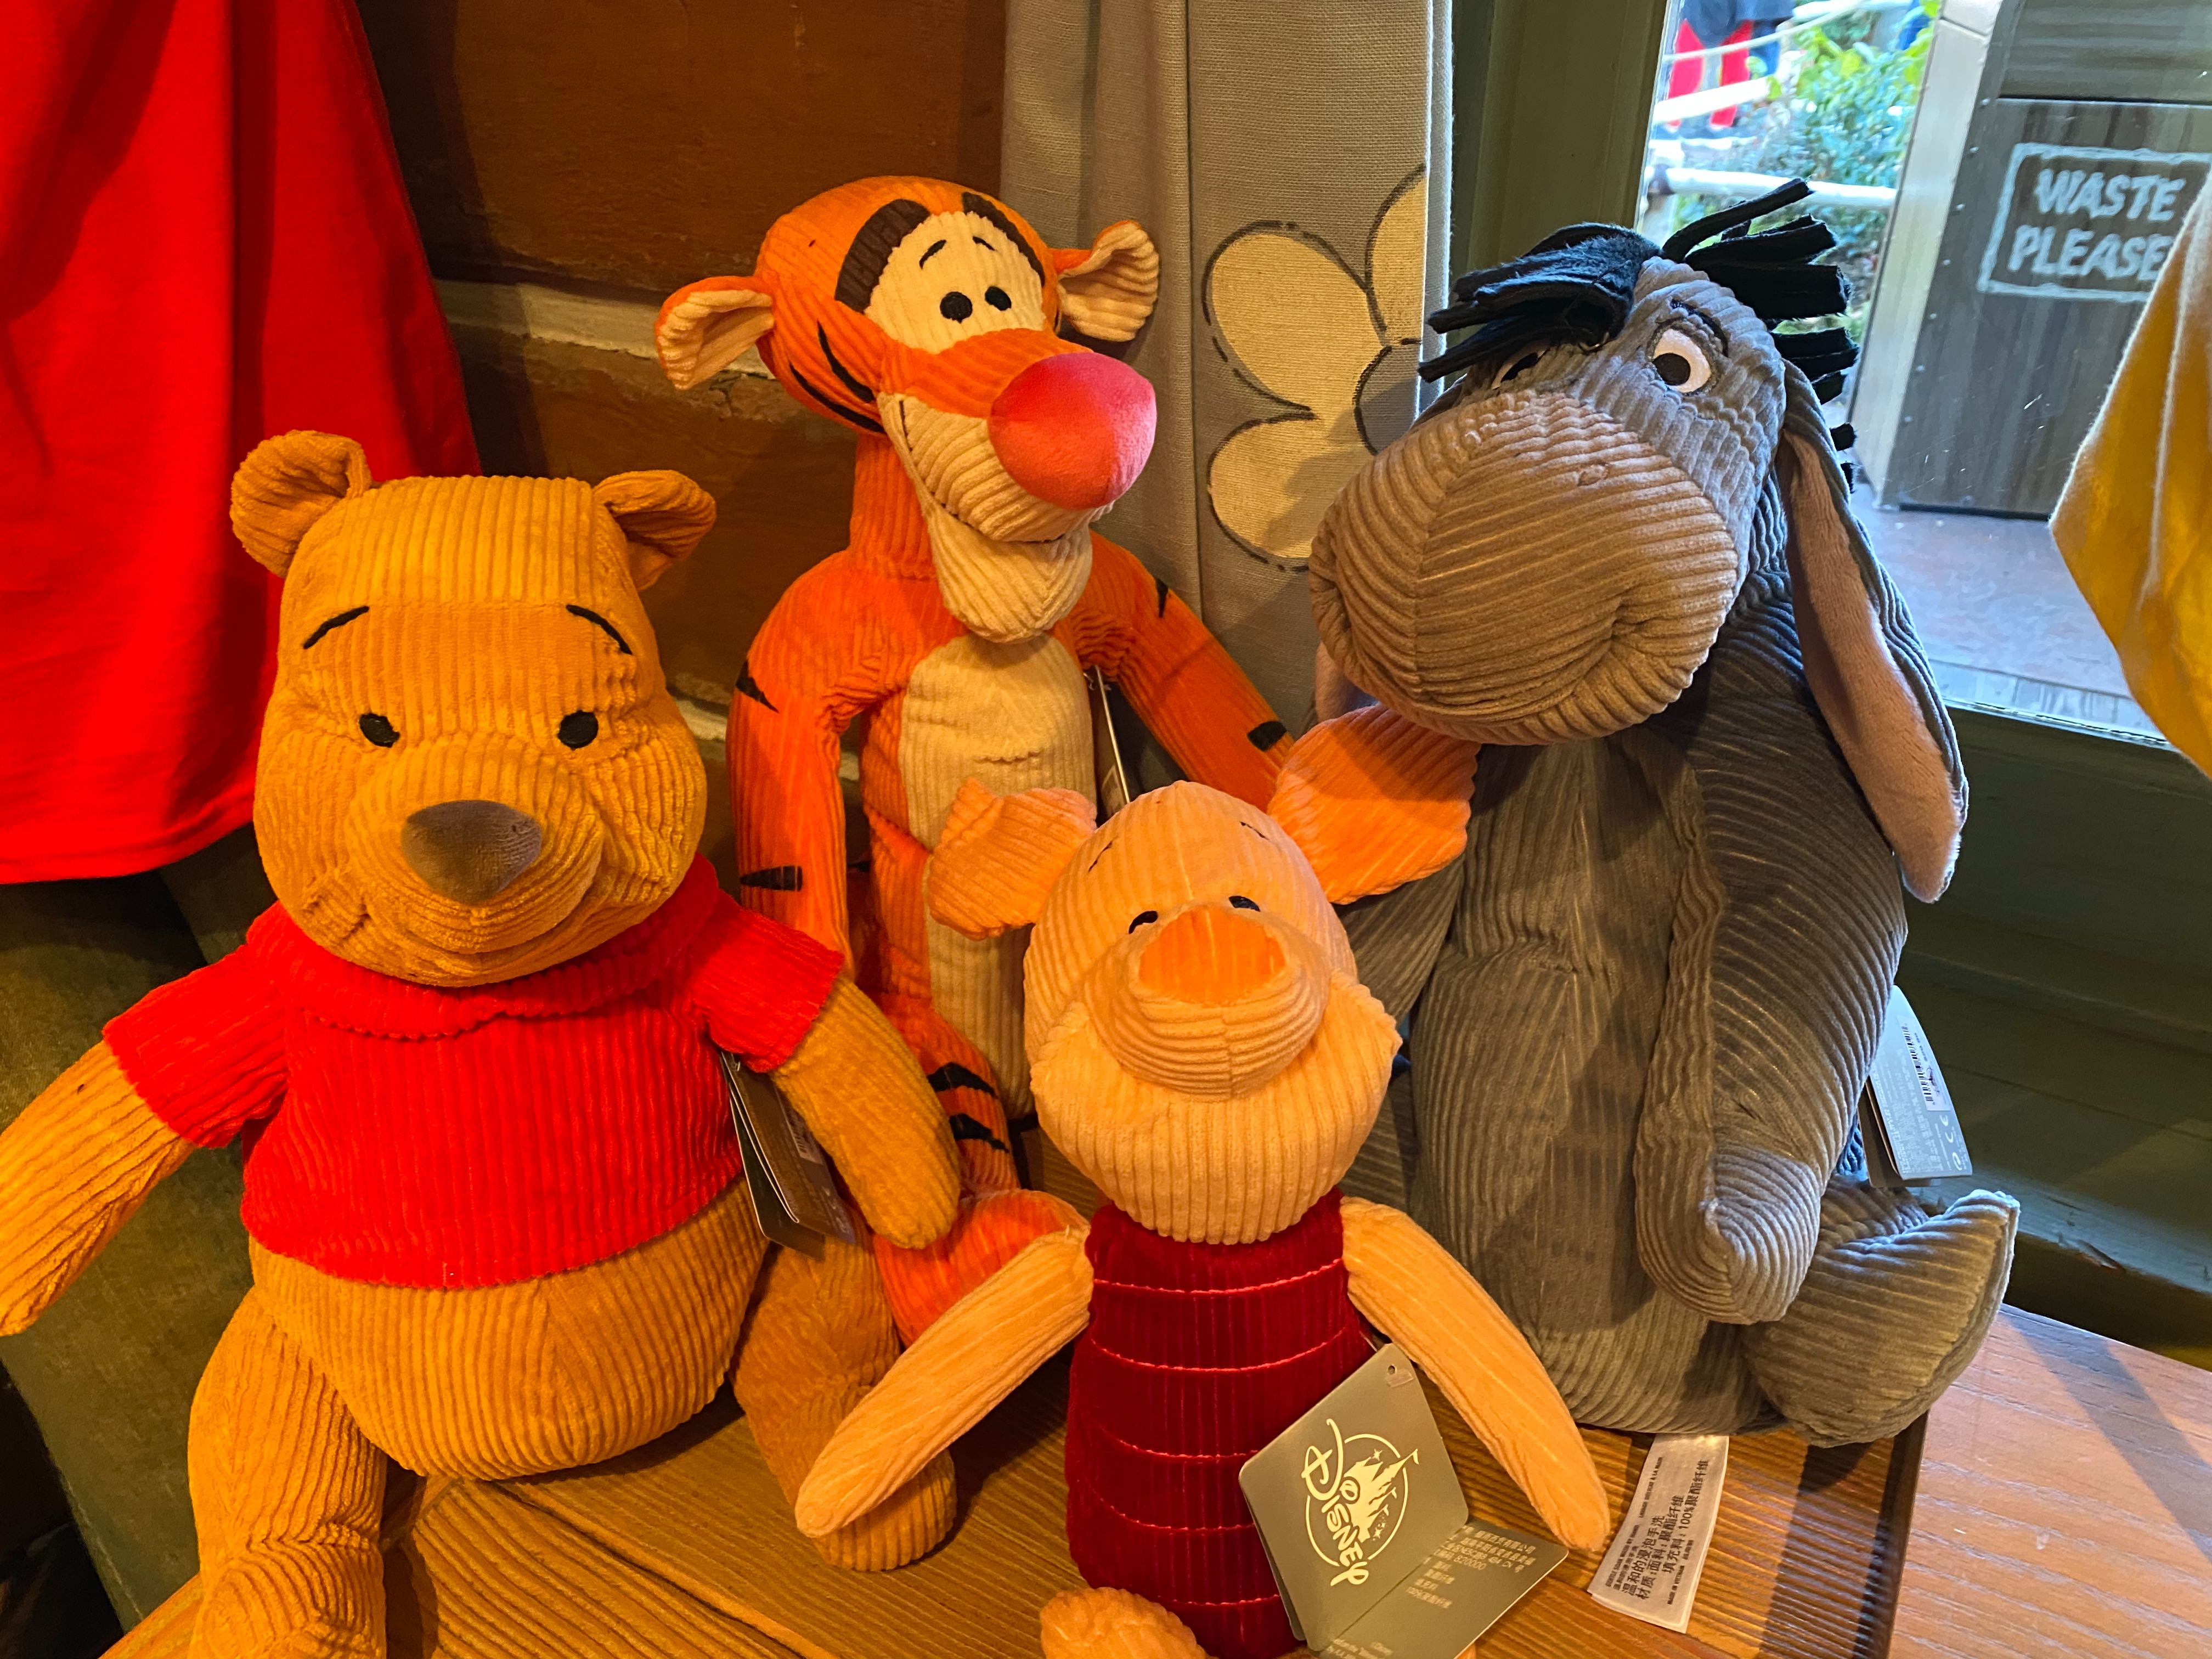 winnie the pooh character stuffed animals